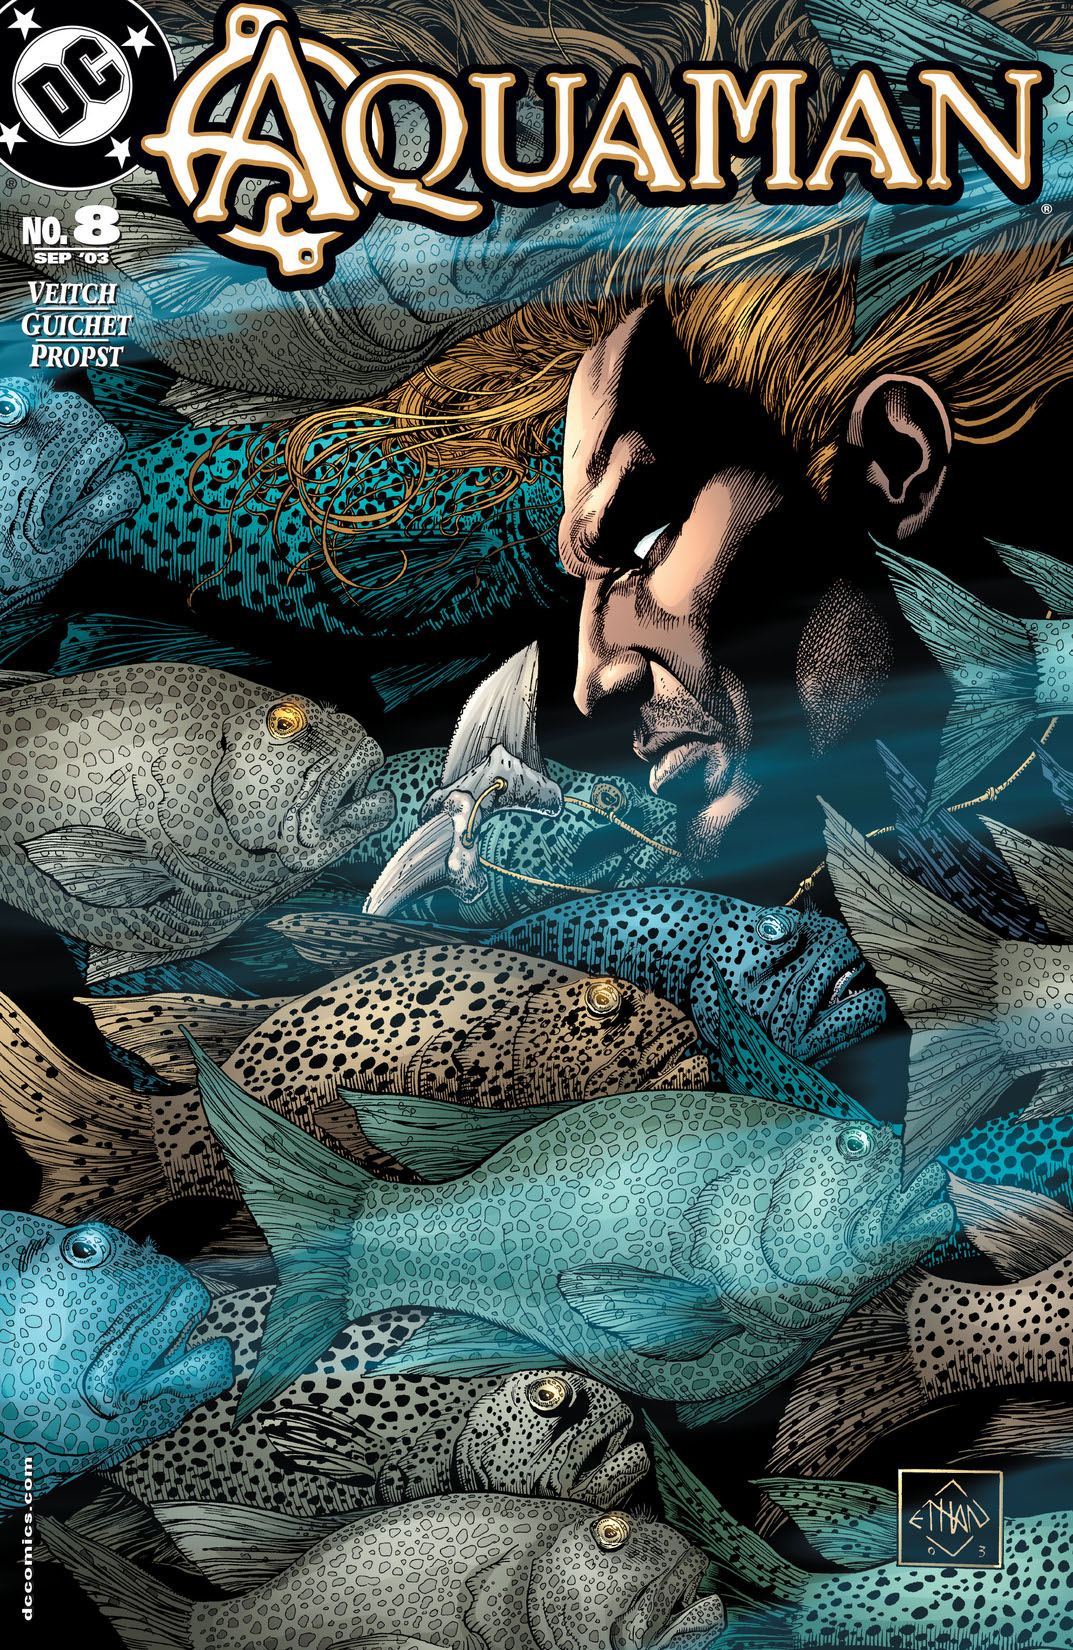 Aquaman (2002-) #8 preview images